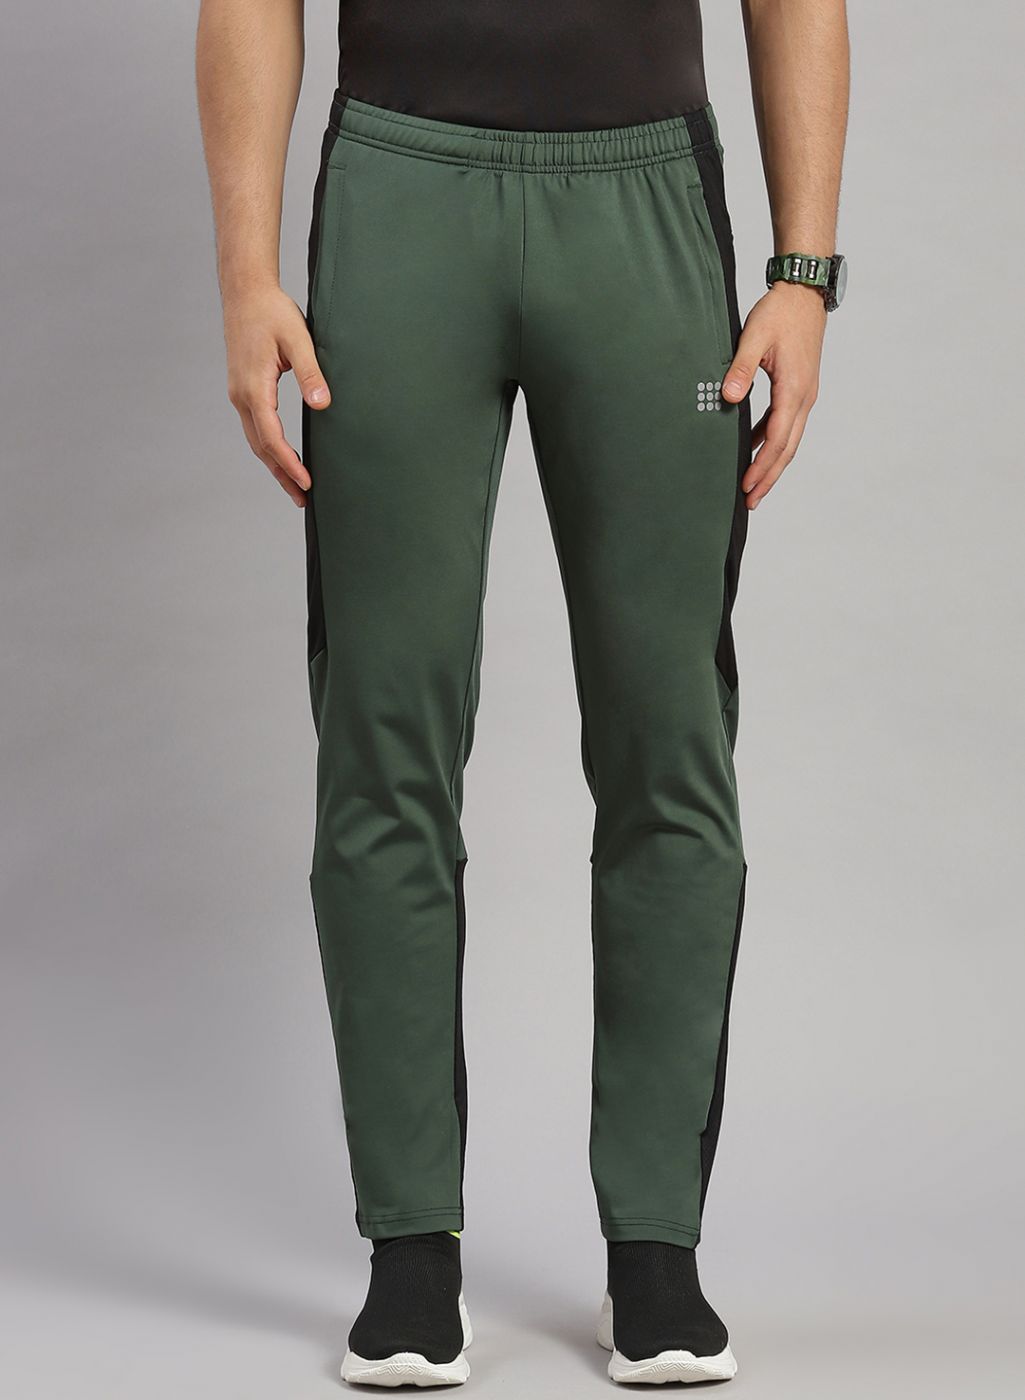 Jack & Jones Mens Joggers Normal Rise Track Pants Comfort Fit Sweatpants  XS- 2XL | eBay